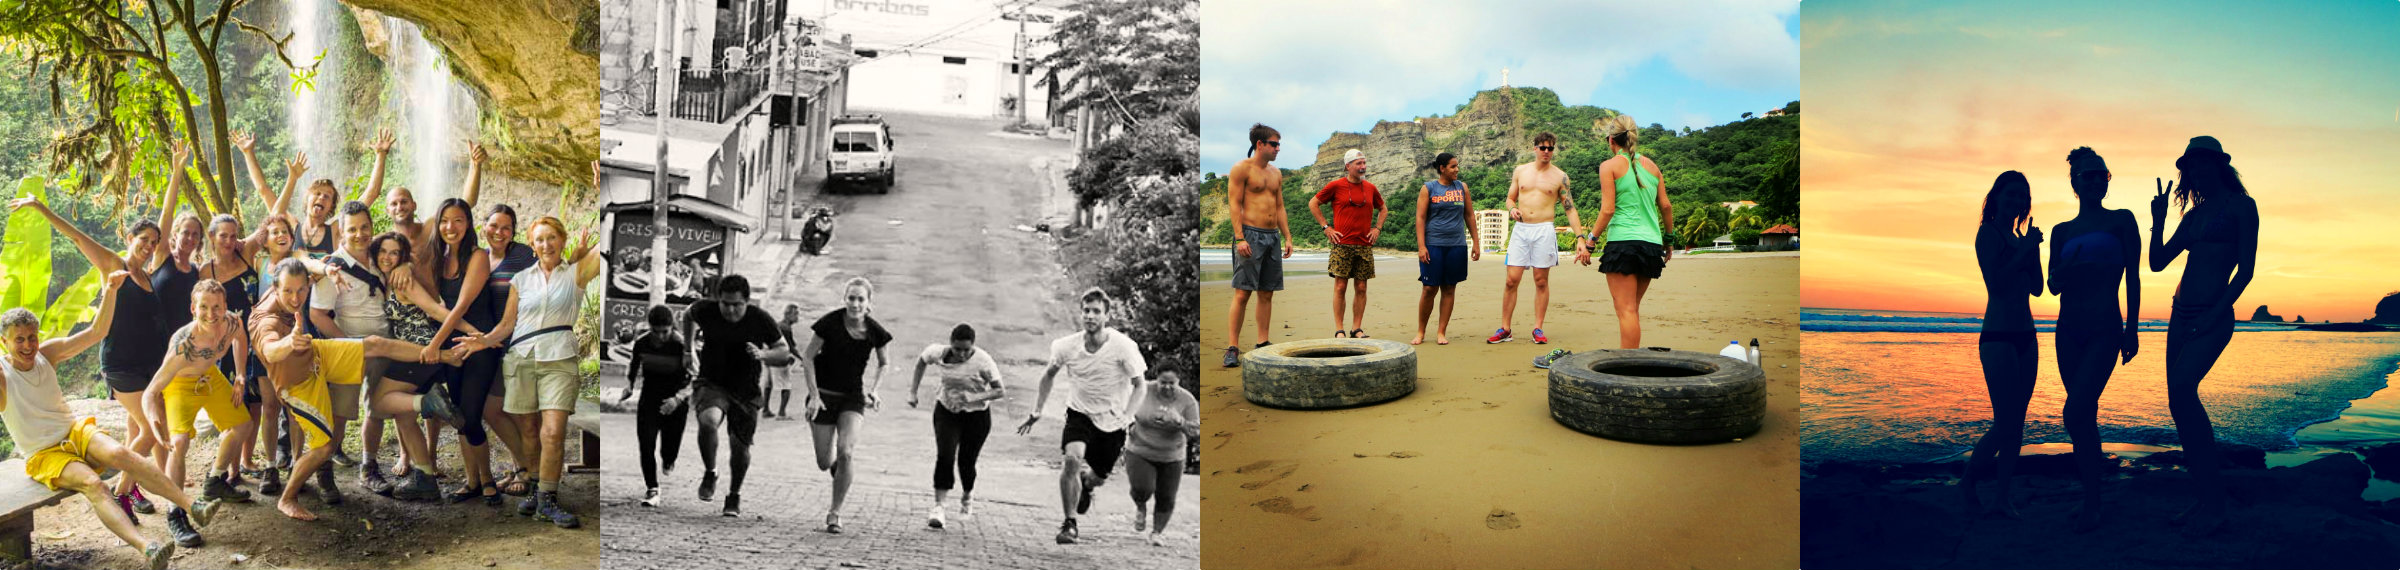 Fitness Retreat Nicaragua